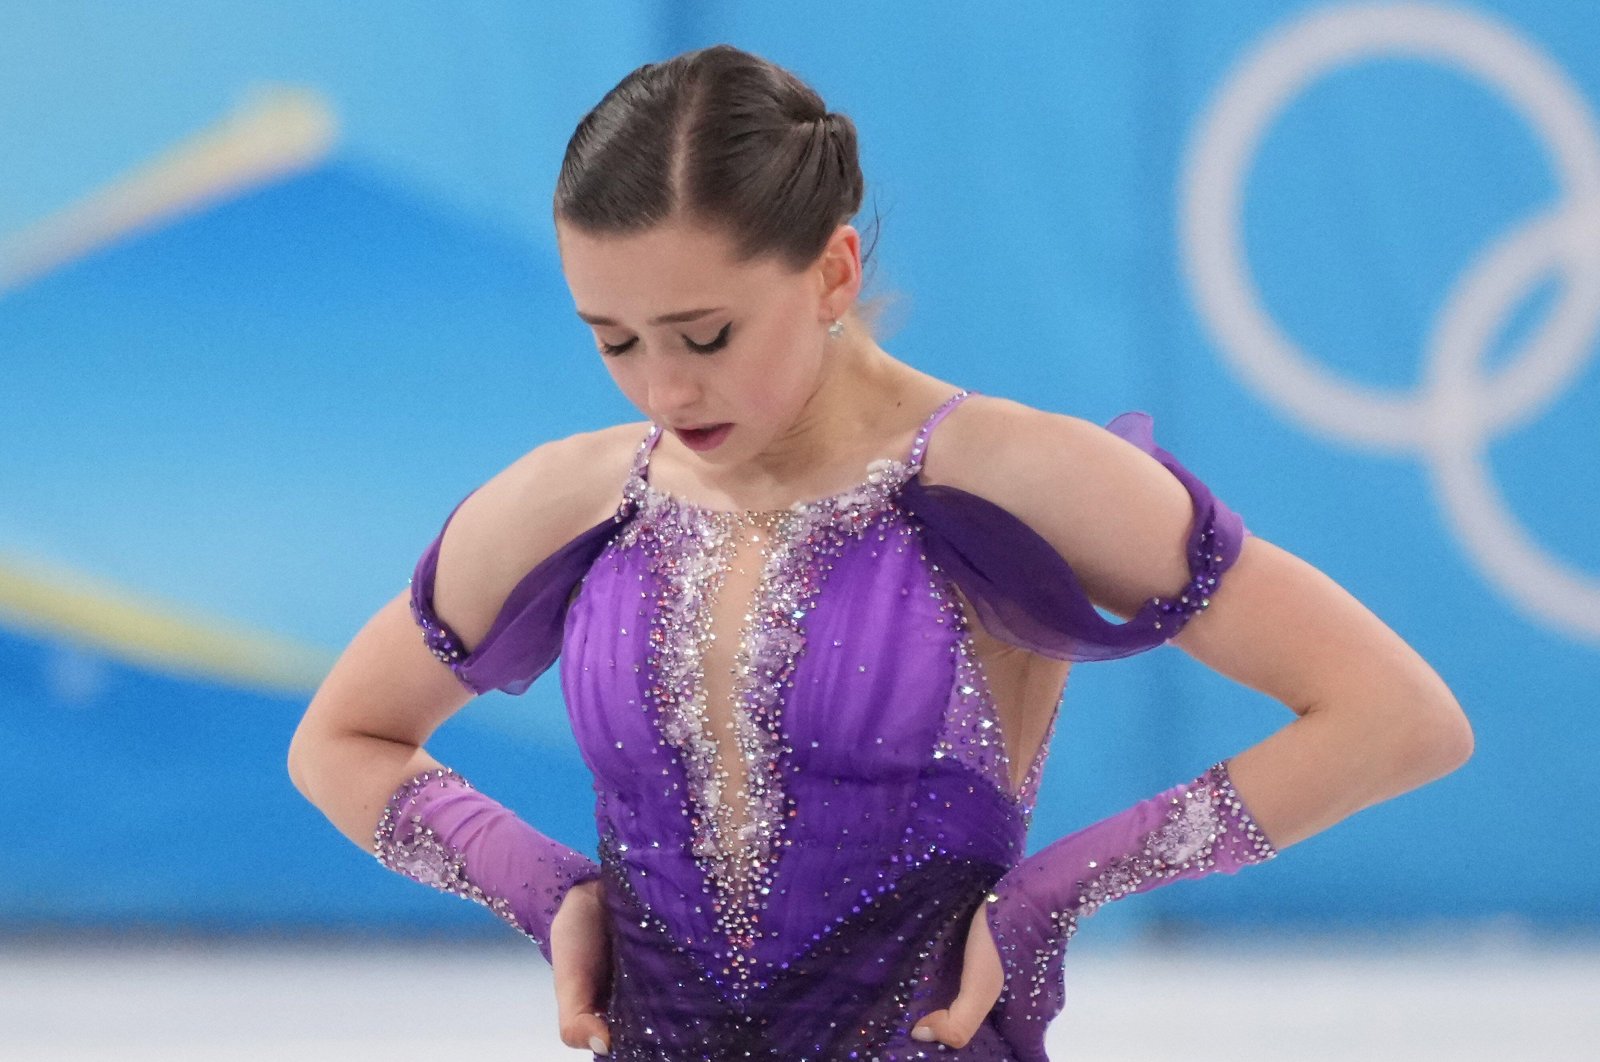 isu-raises-figure-skating-minimum-age-to-17-before-2026-olympics-daily-sabah